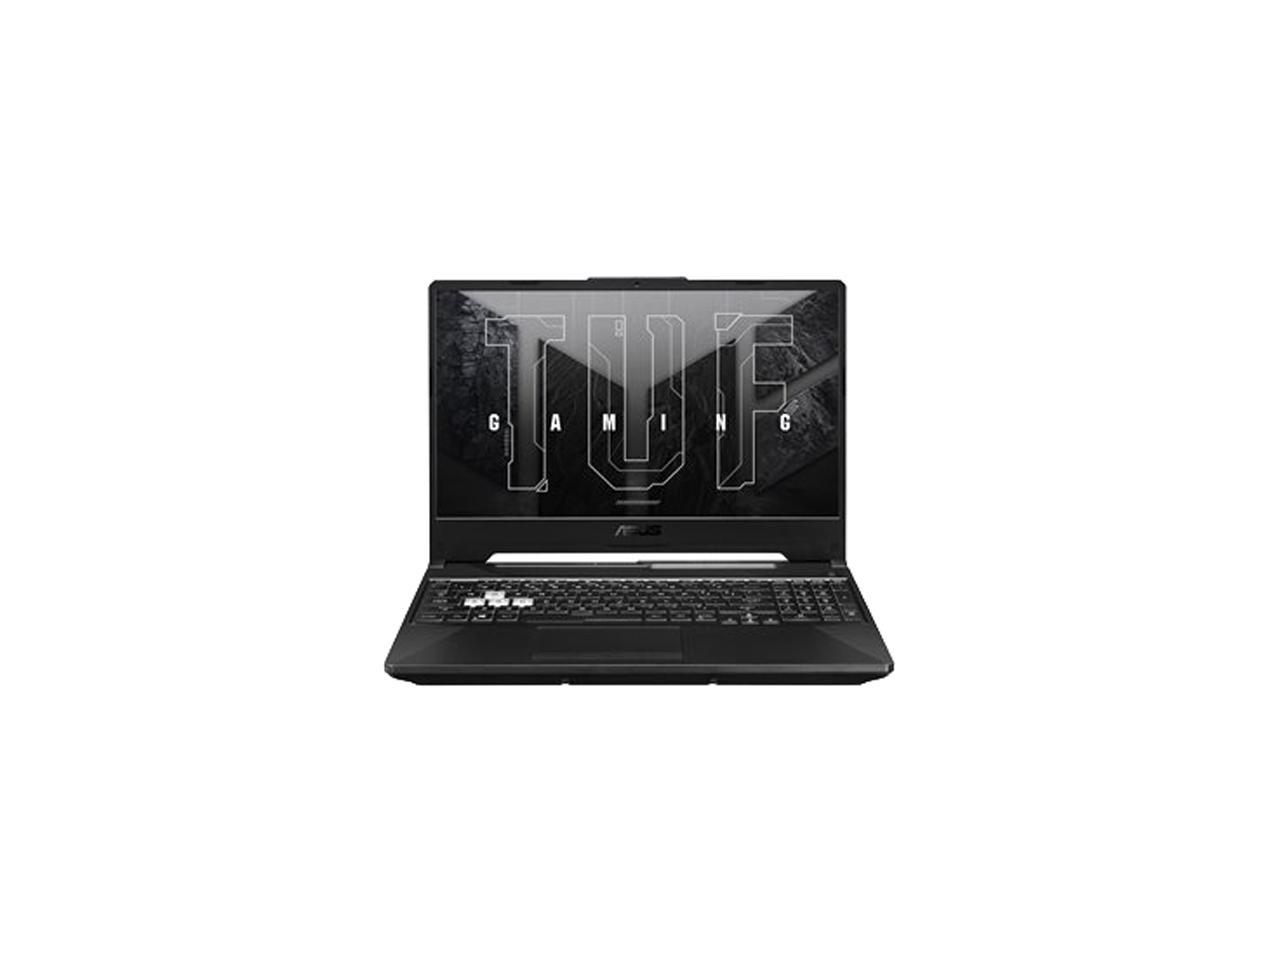 ASUS TUF Gaming - 15.6" 144 Hz - Intel Core i5 11th Gen 11400H (2.70GHz) - NVIDIA GeForce RTX 3050 Ti Laptop GPU - 16 GB DDR4 - 512 GB SSD - Windows 10 Home 64-bit - Gaming Laptop (FX506HE-RS54 )